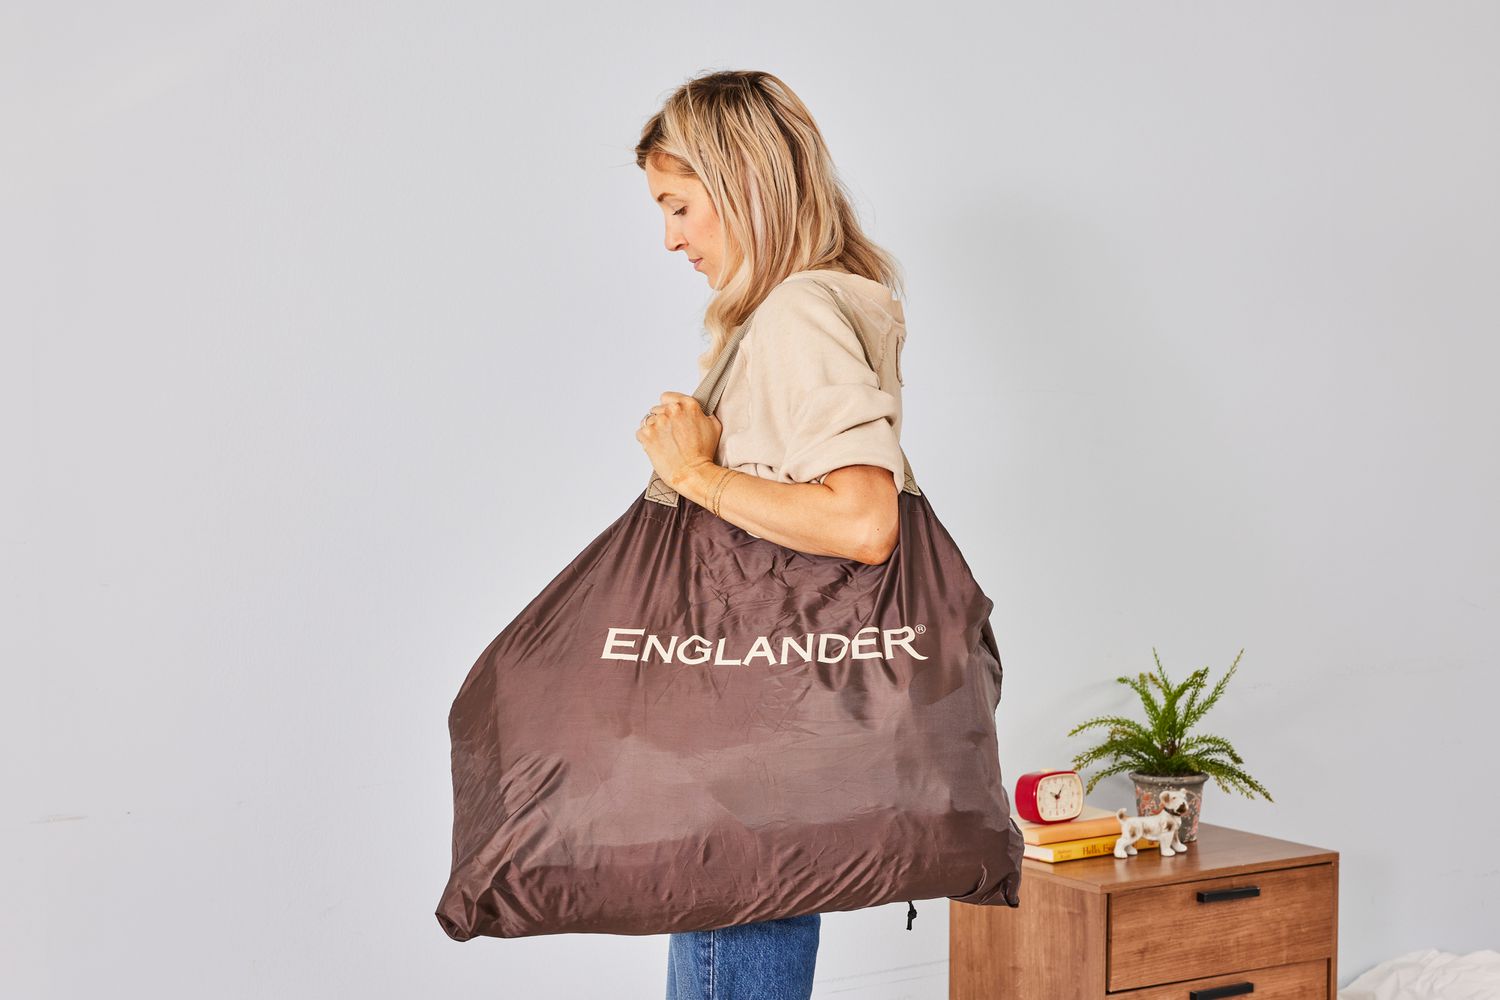 A person carries the Englander Air Mattress in a bag